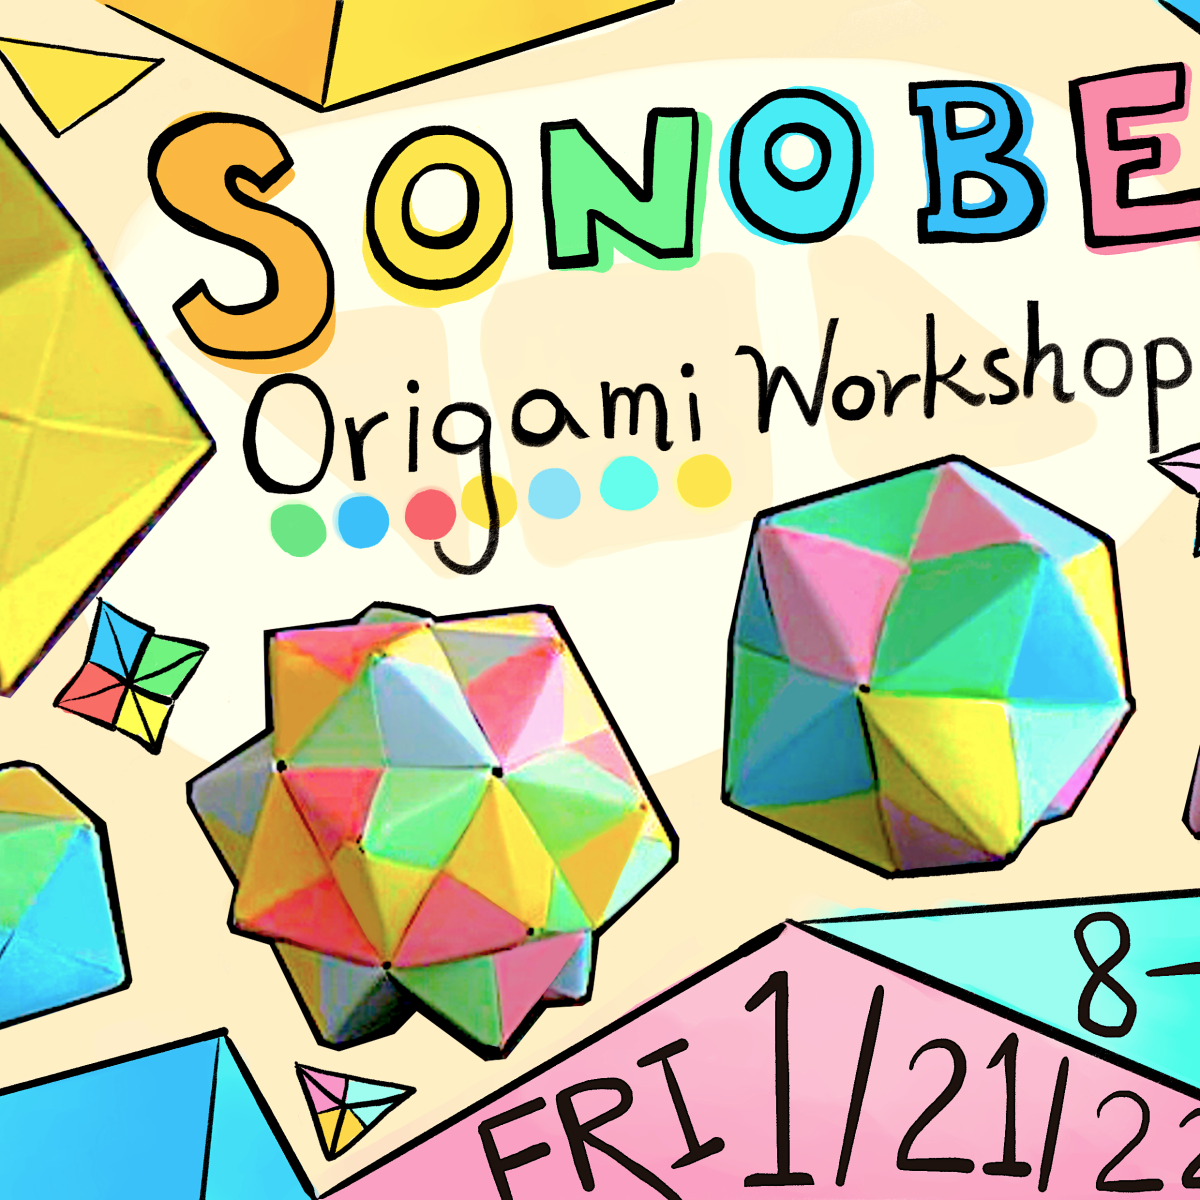 Sonobe Workshop! ◢◤